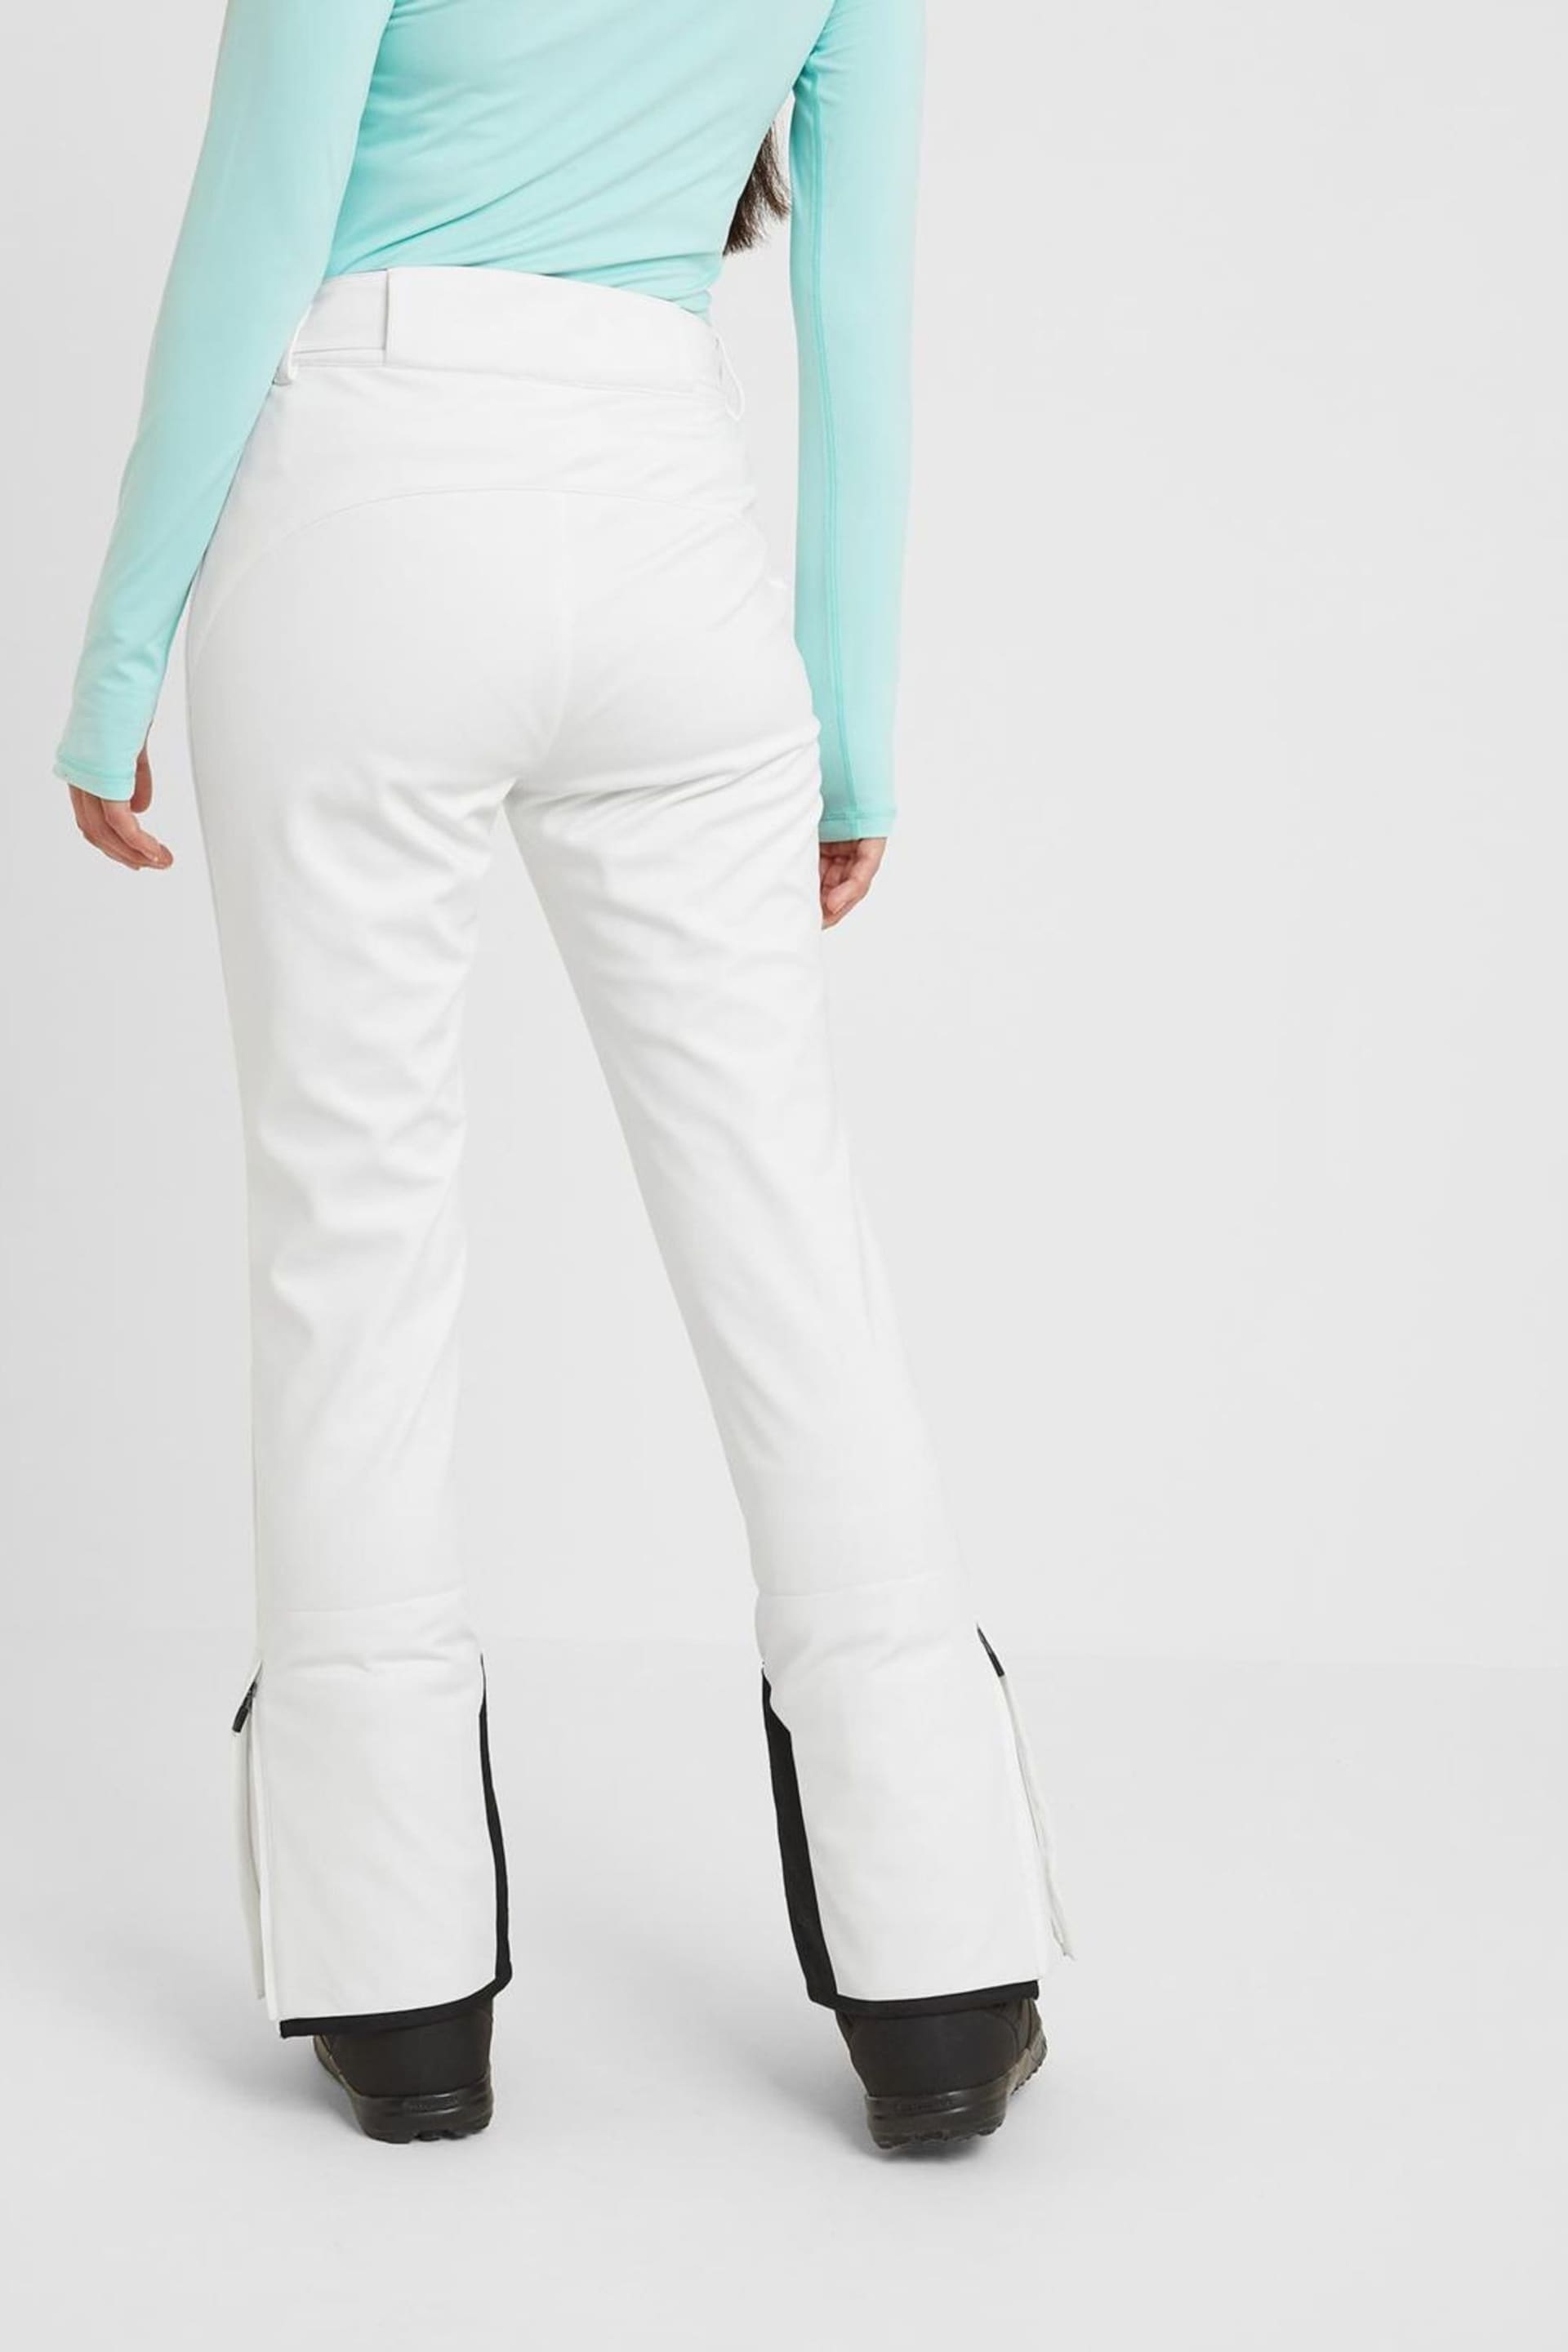 Tog 24 White Drivis Ski Trousers - Image 2 of 4